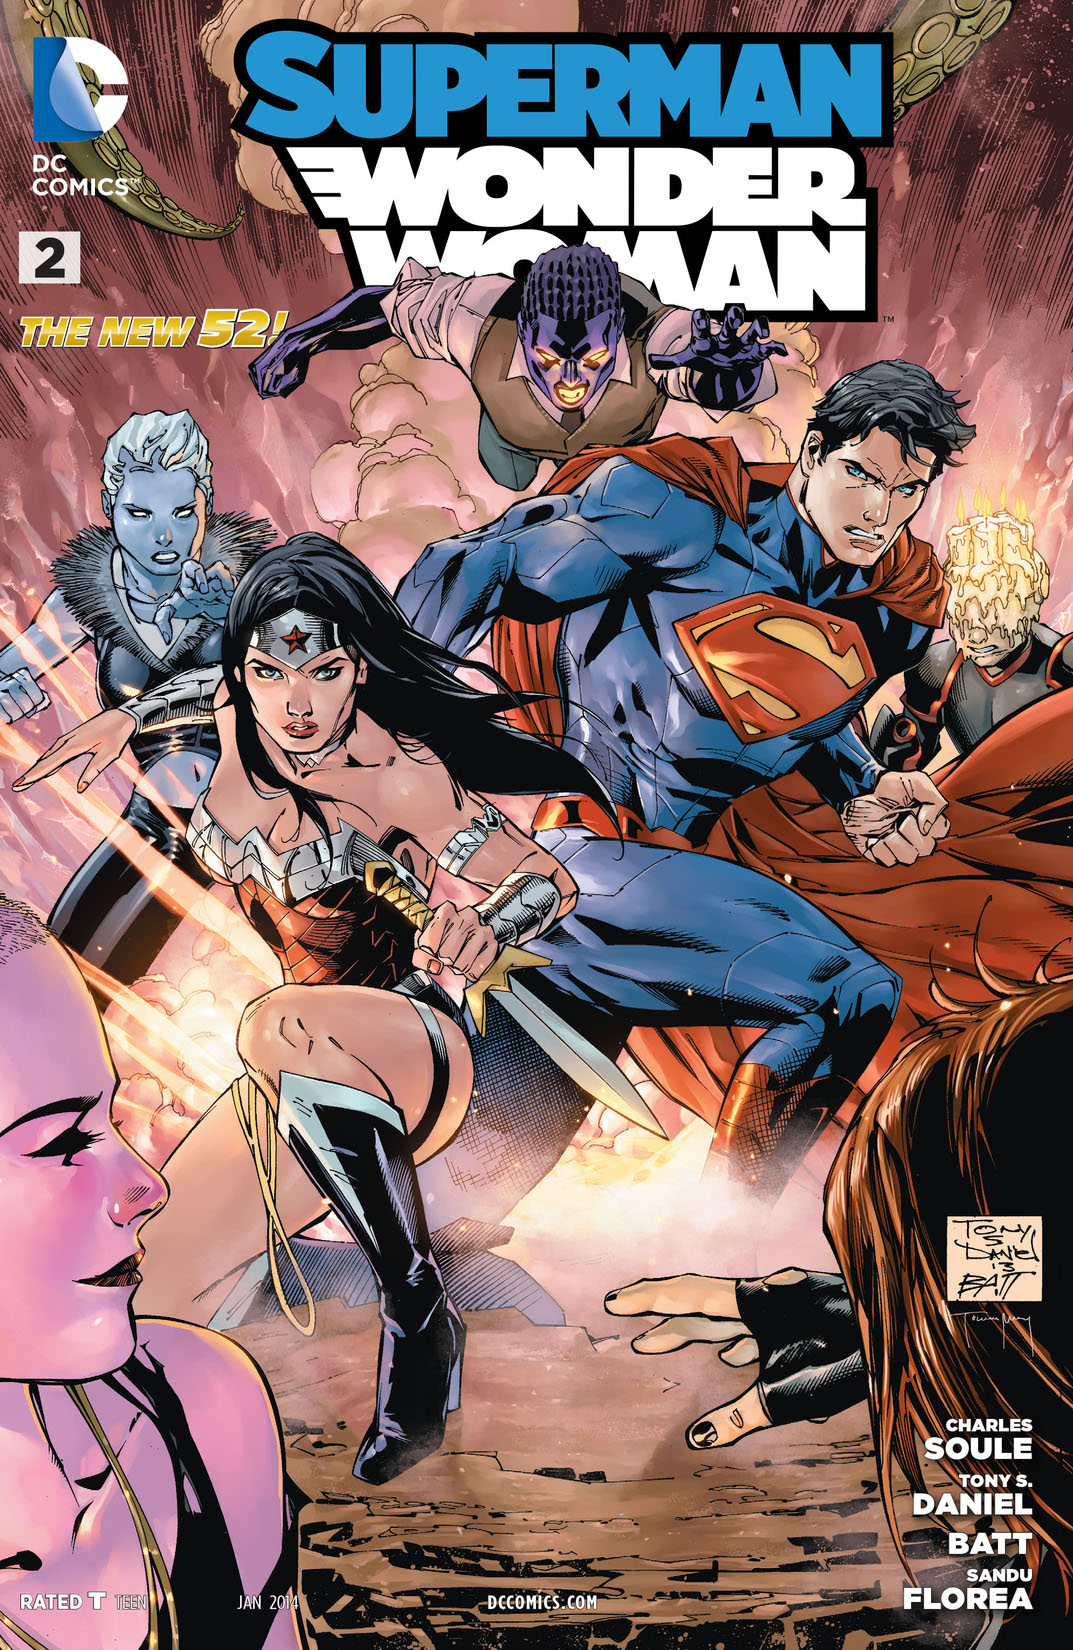 Superman/Wonder Woman #2 preview images